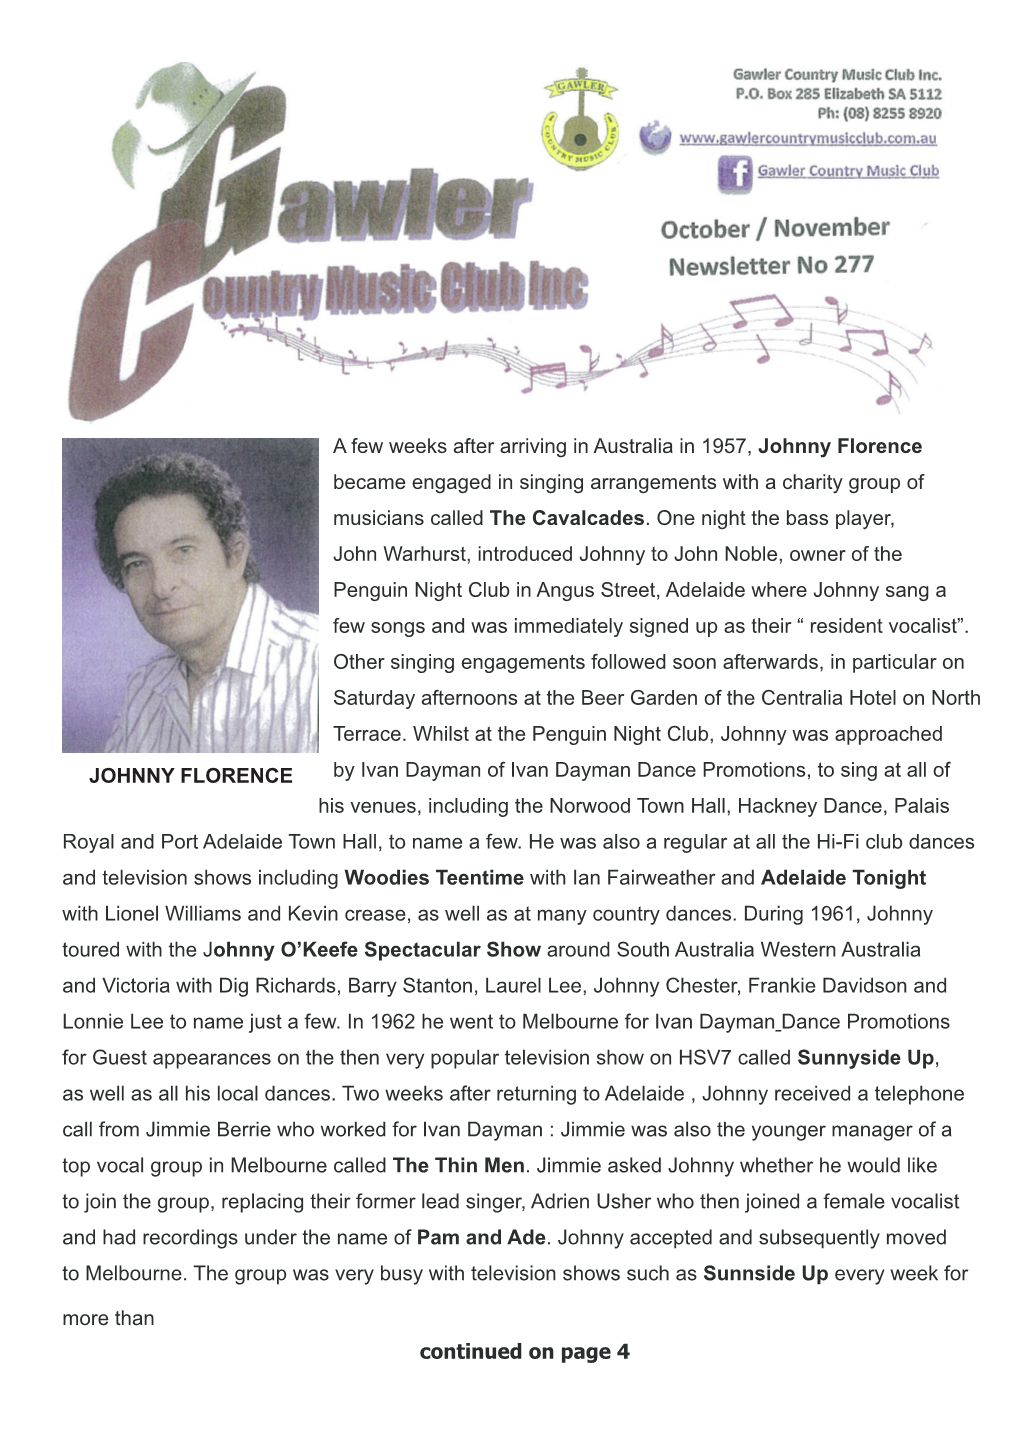 Gawler CM Club October / November 2016 Newsletter